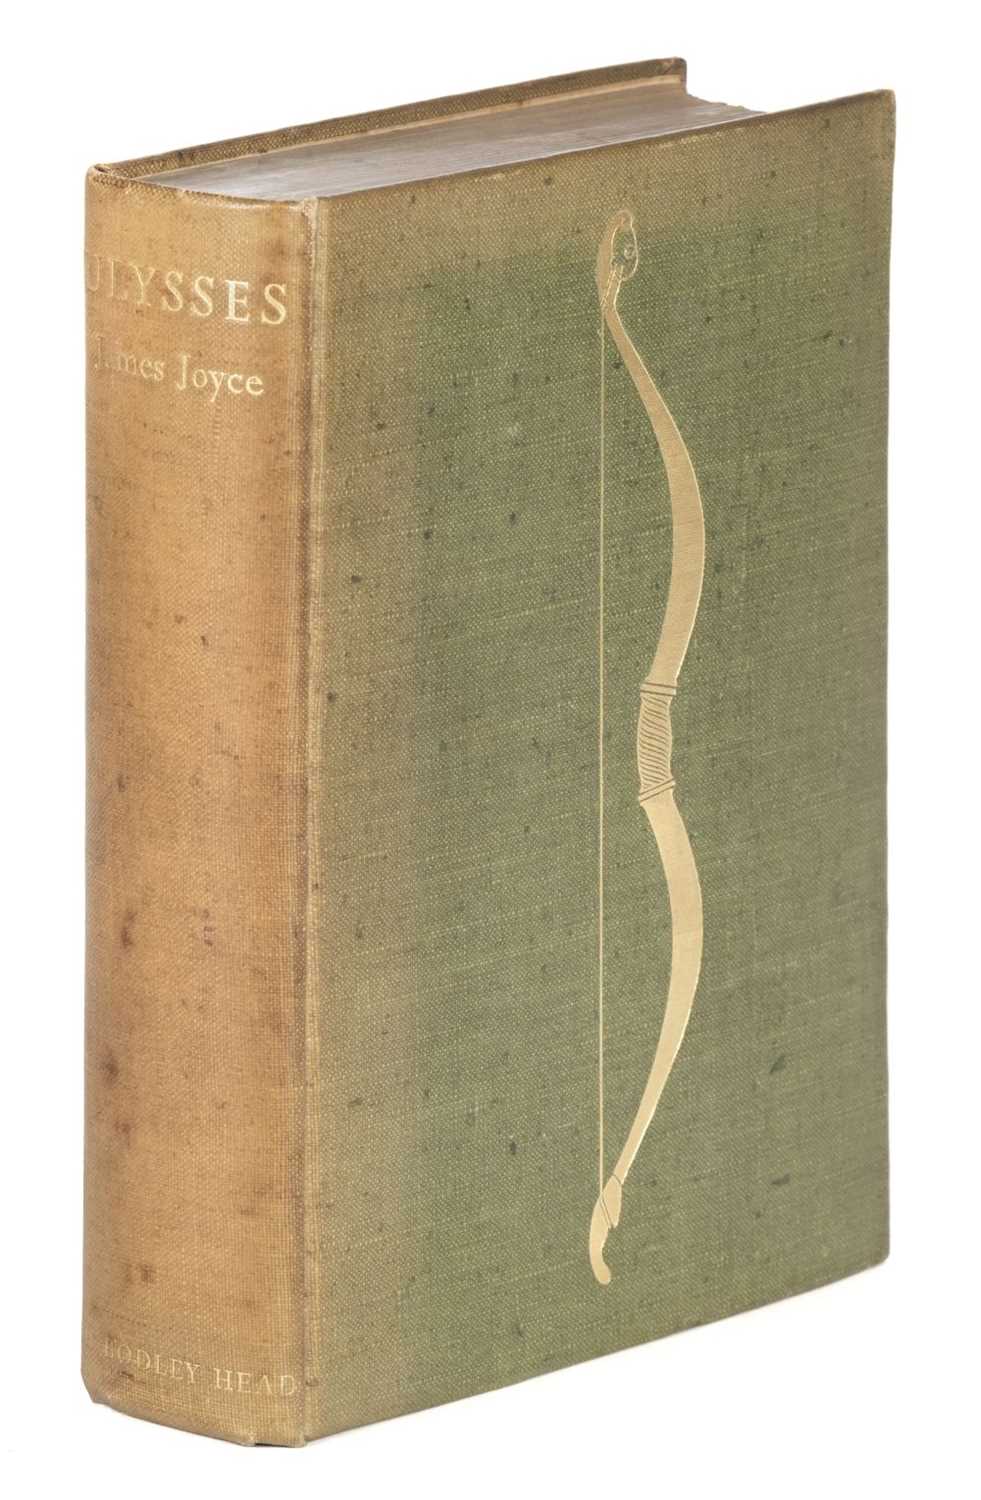 Lot 850 - Joyce (James). Ulysses, London: John Lane, The Bodley Head, 1936